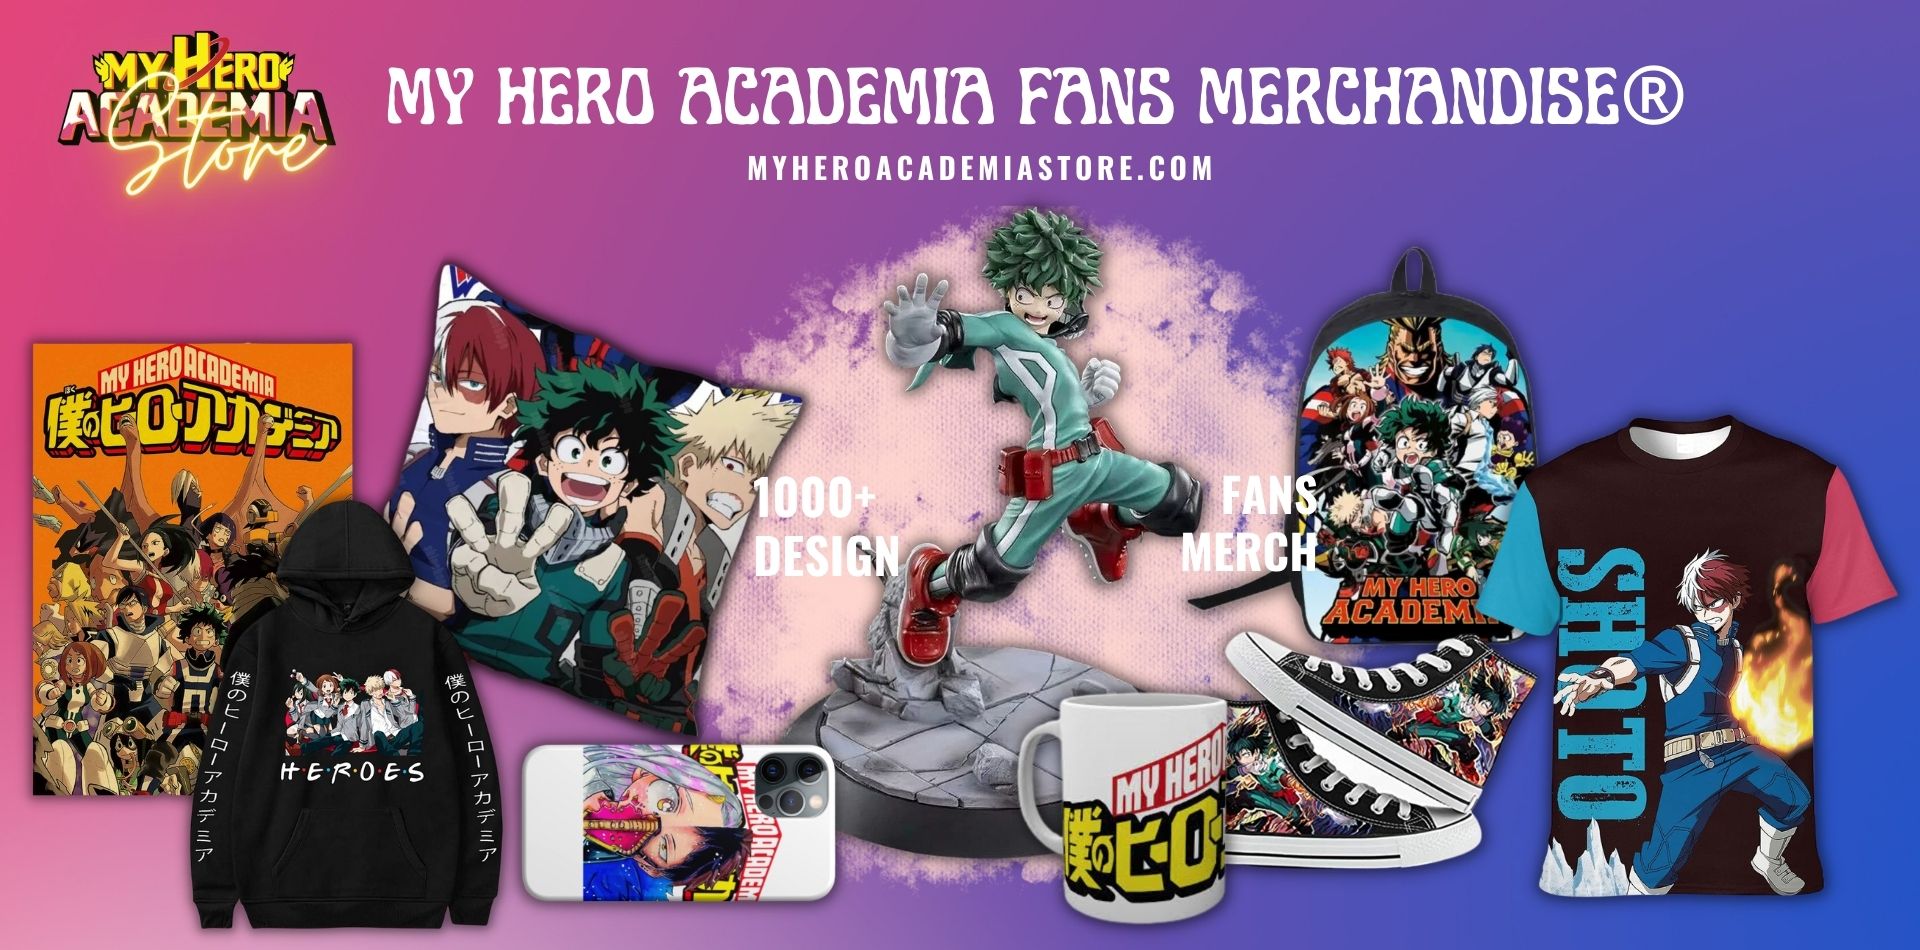 My Hero Academia Web Banner - My Hero Academia Store